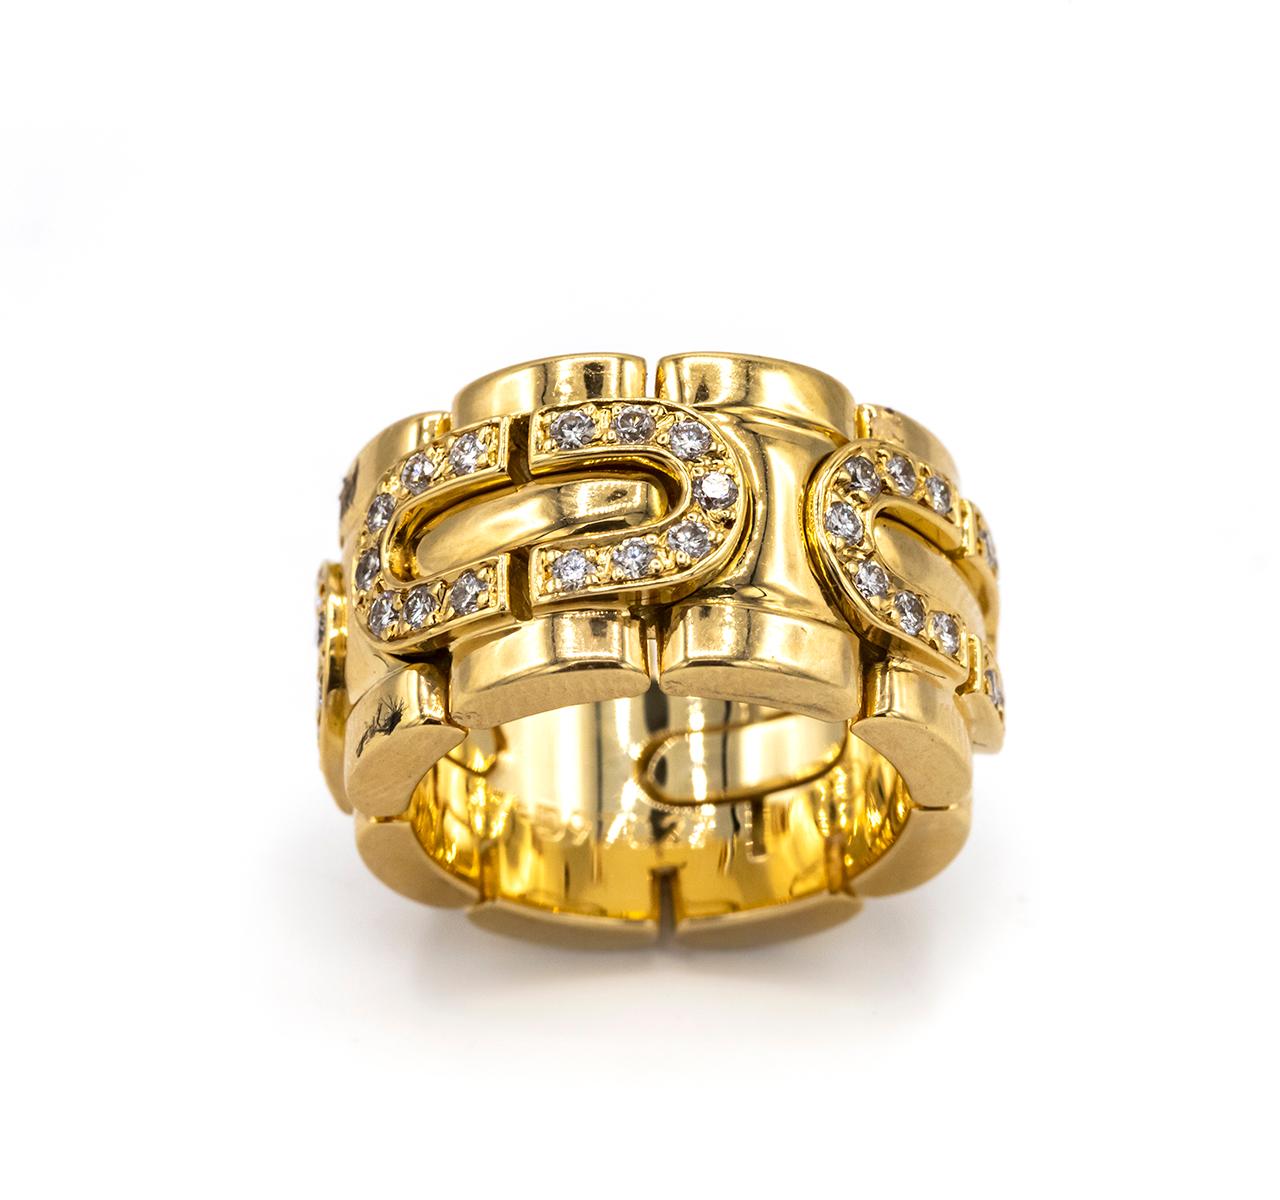 1902 18k gold ring